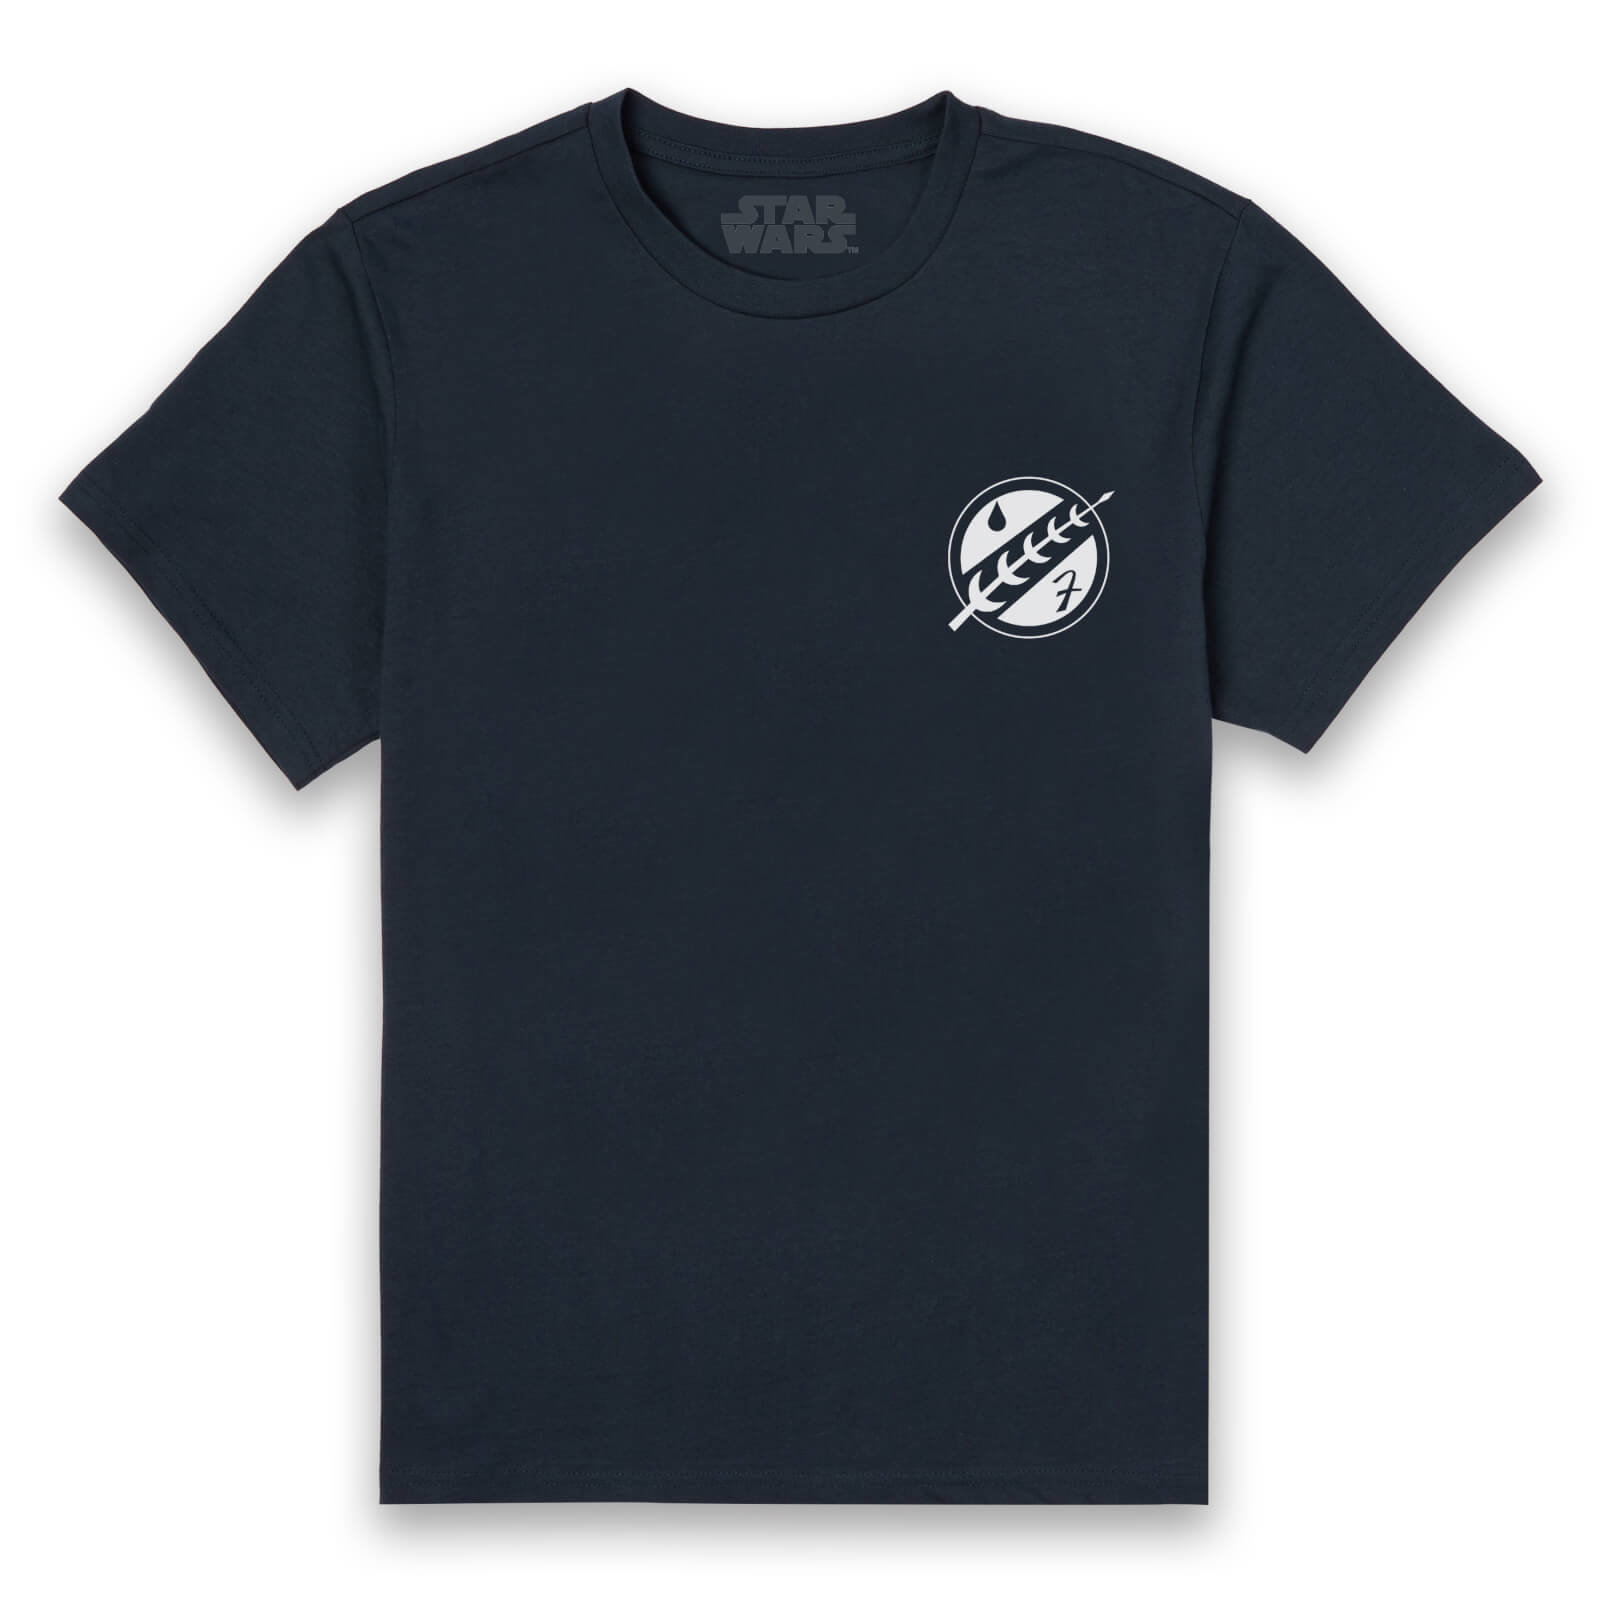 Star Wars Mandalorian Crest Unisex T-Shirt - Navy - S - Navy blauw